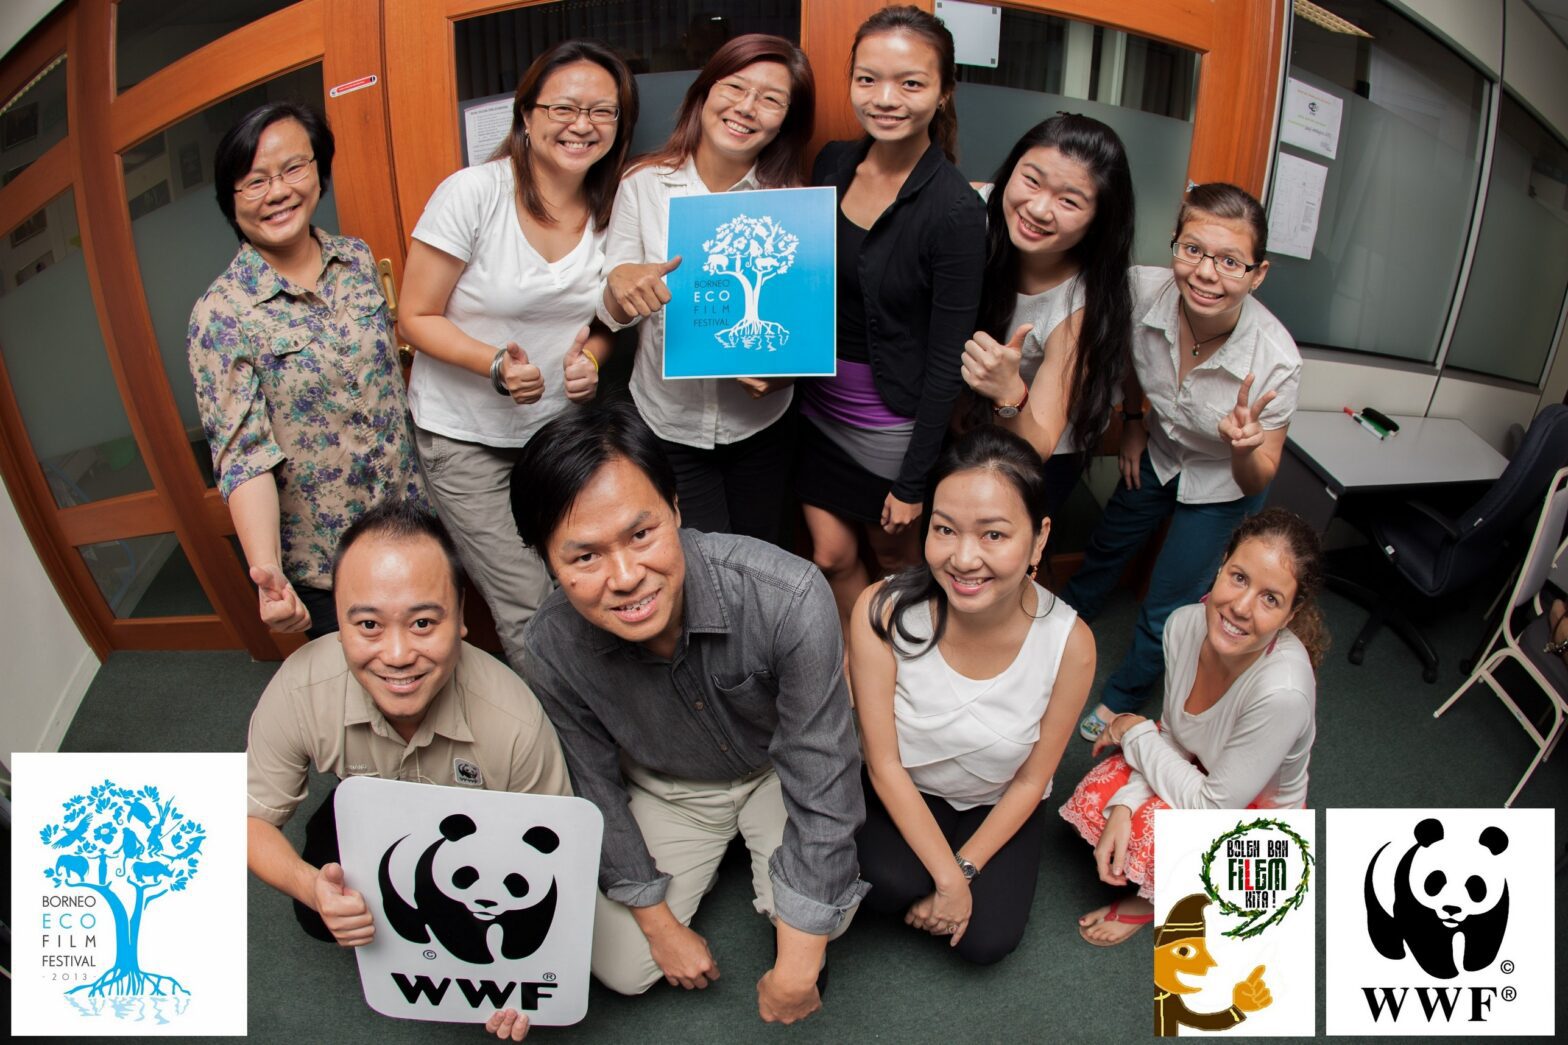 Borneo Eco Film Festival partners with WWF